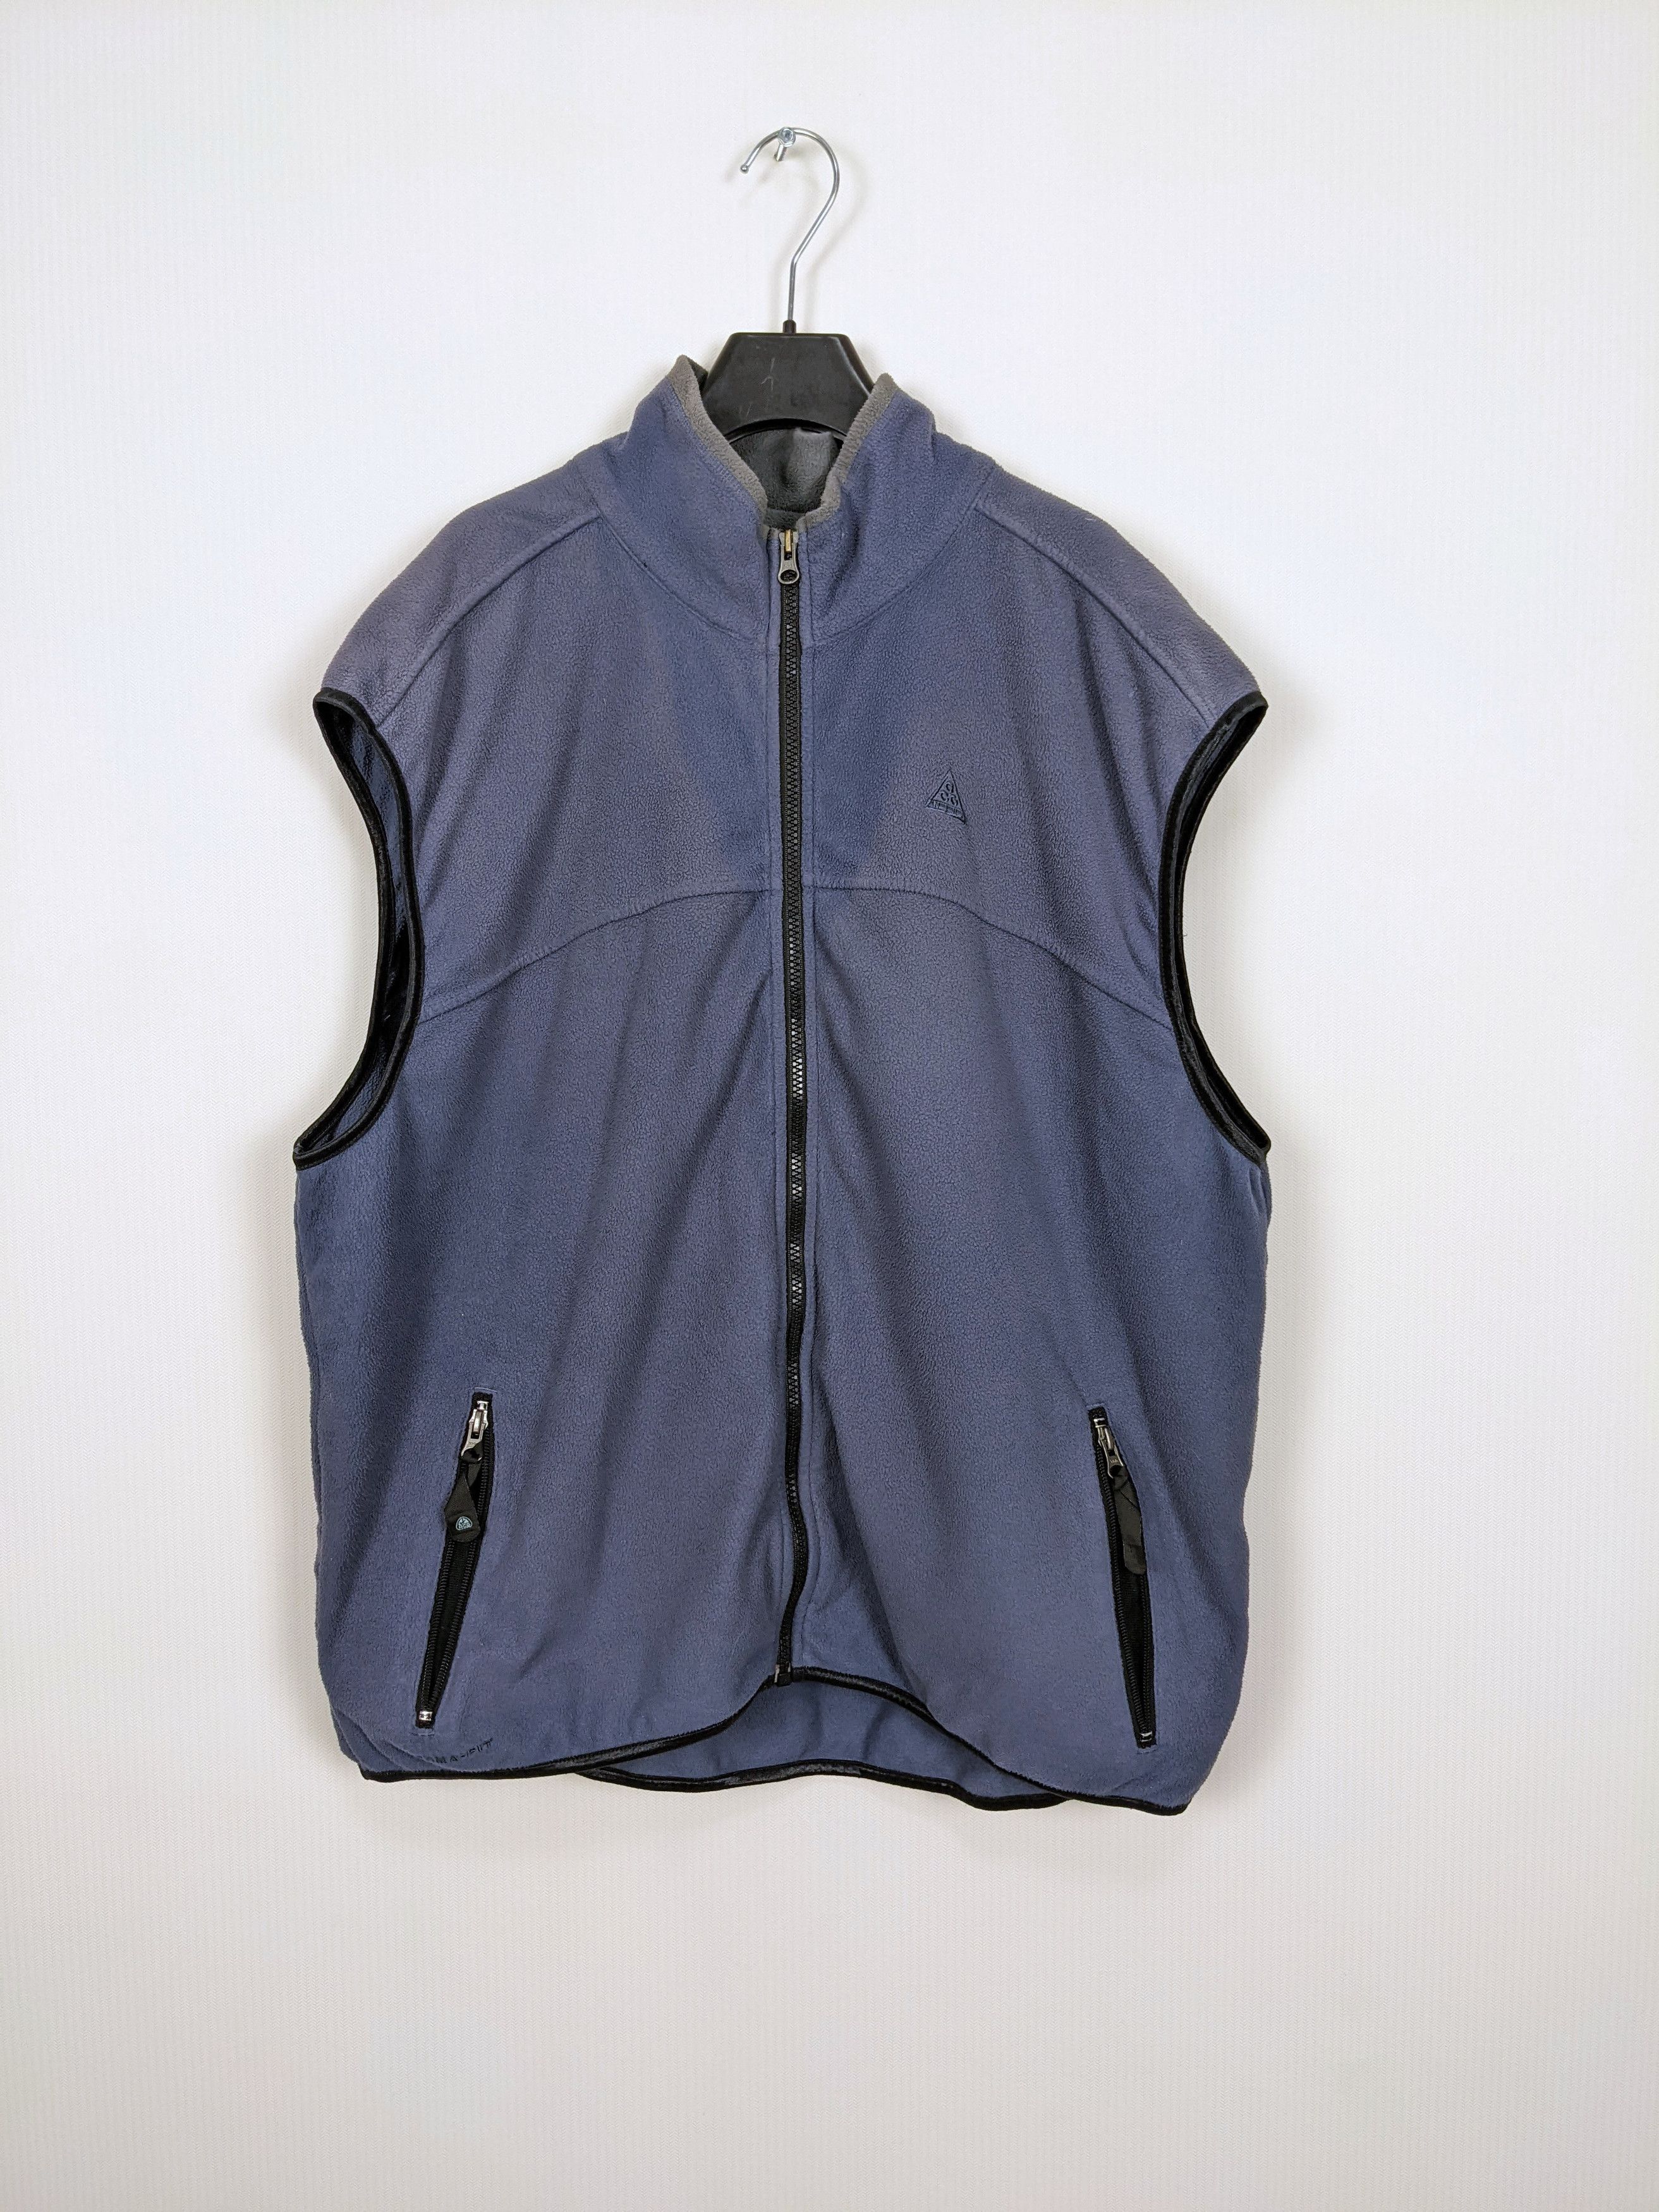 Nike Mike acg retro fleece vest | Grailed